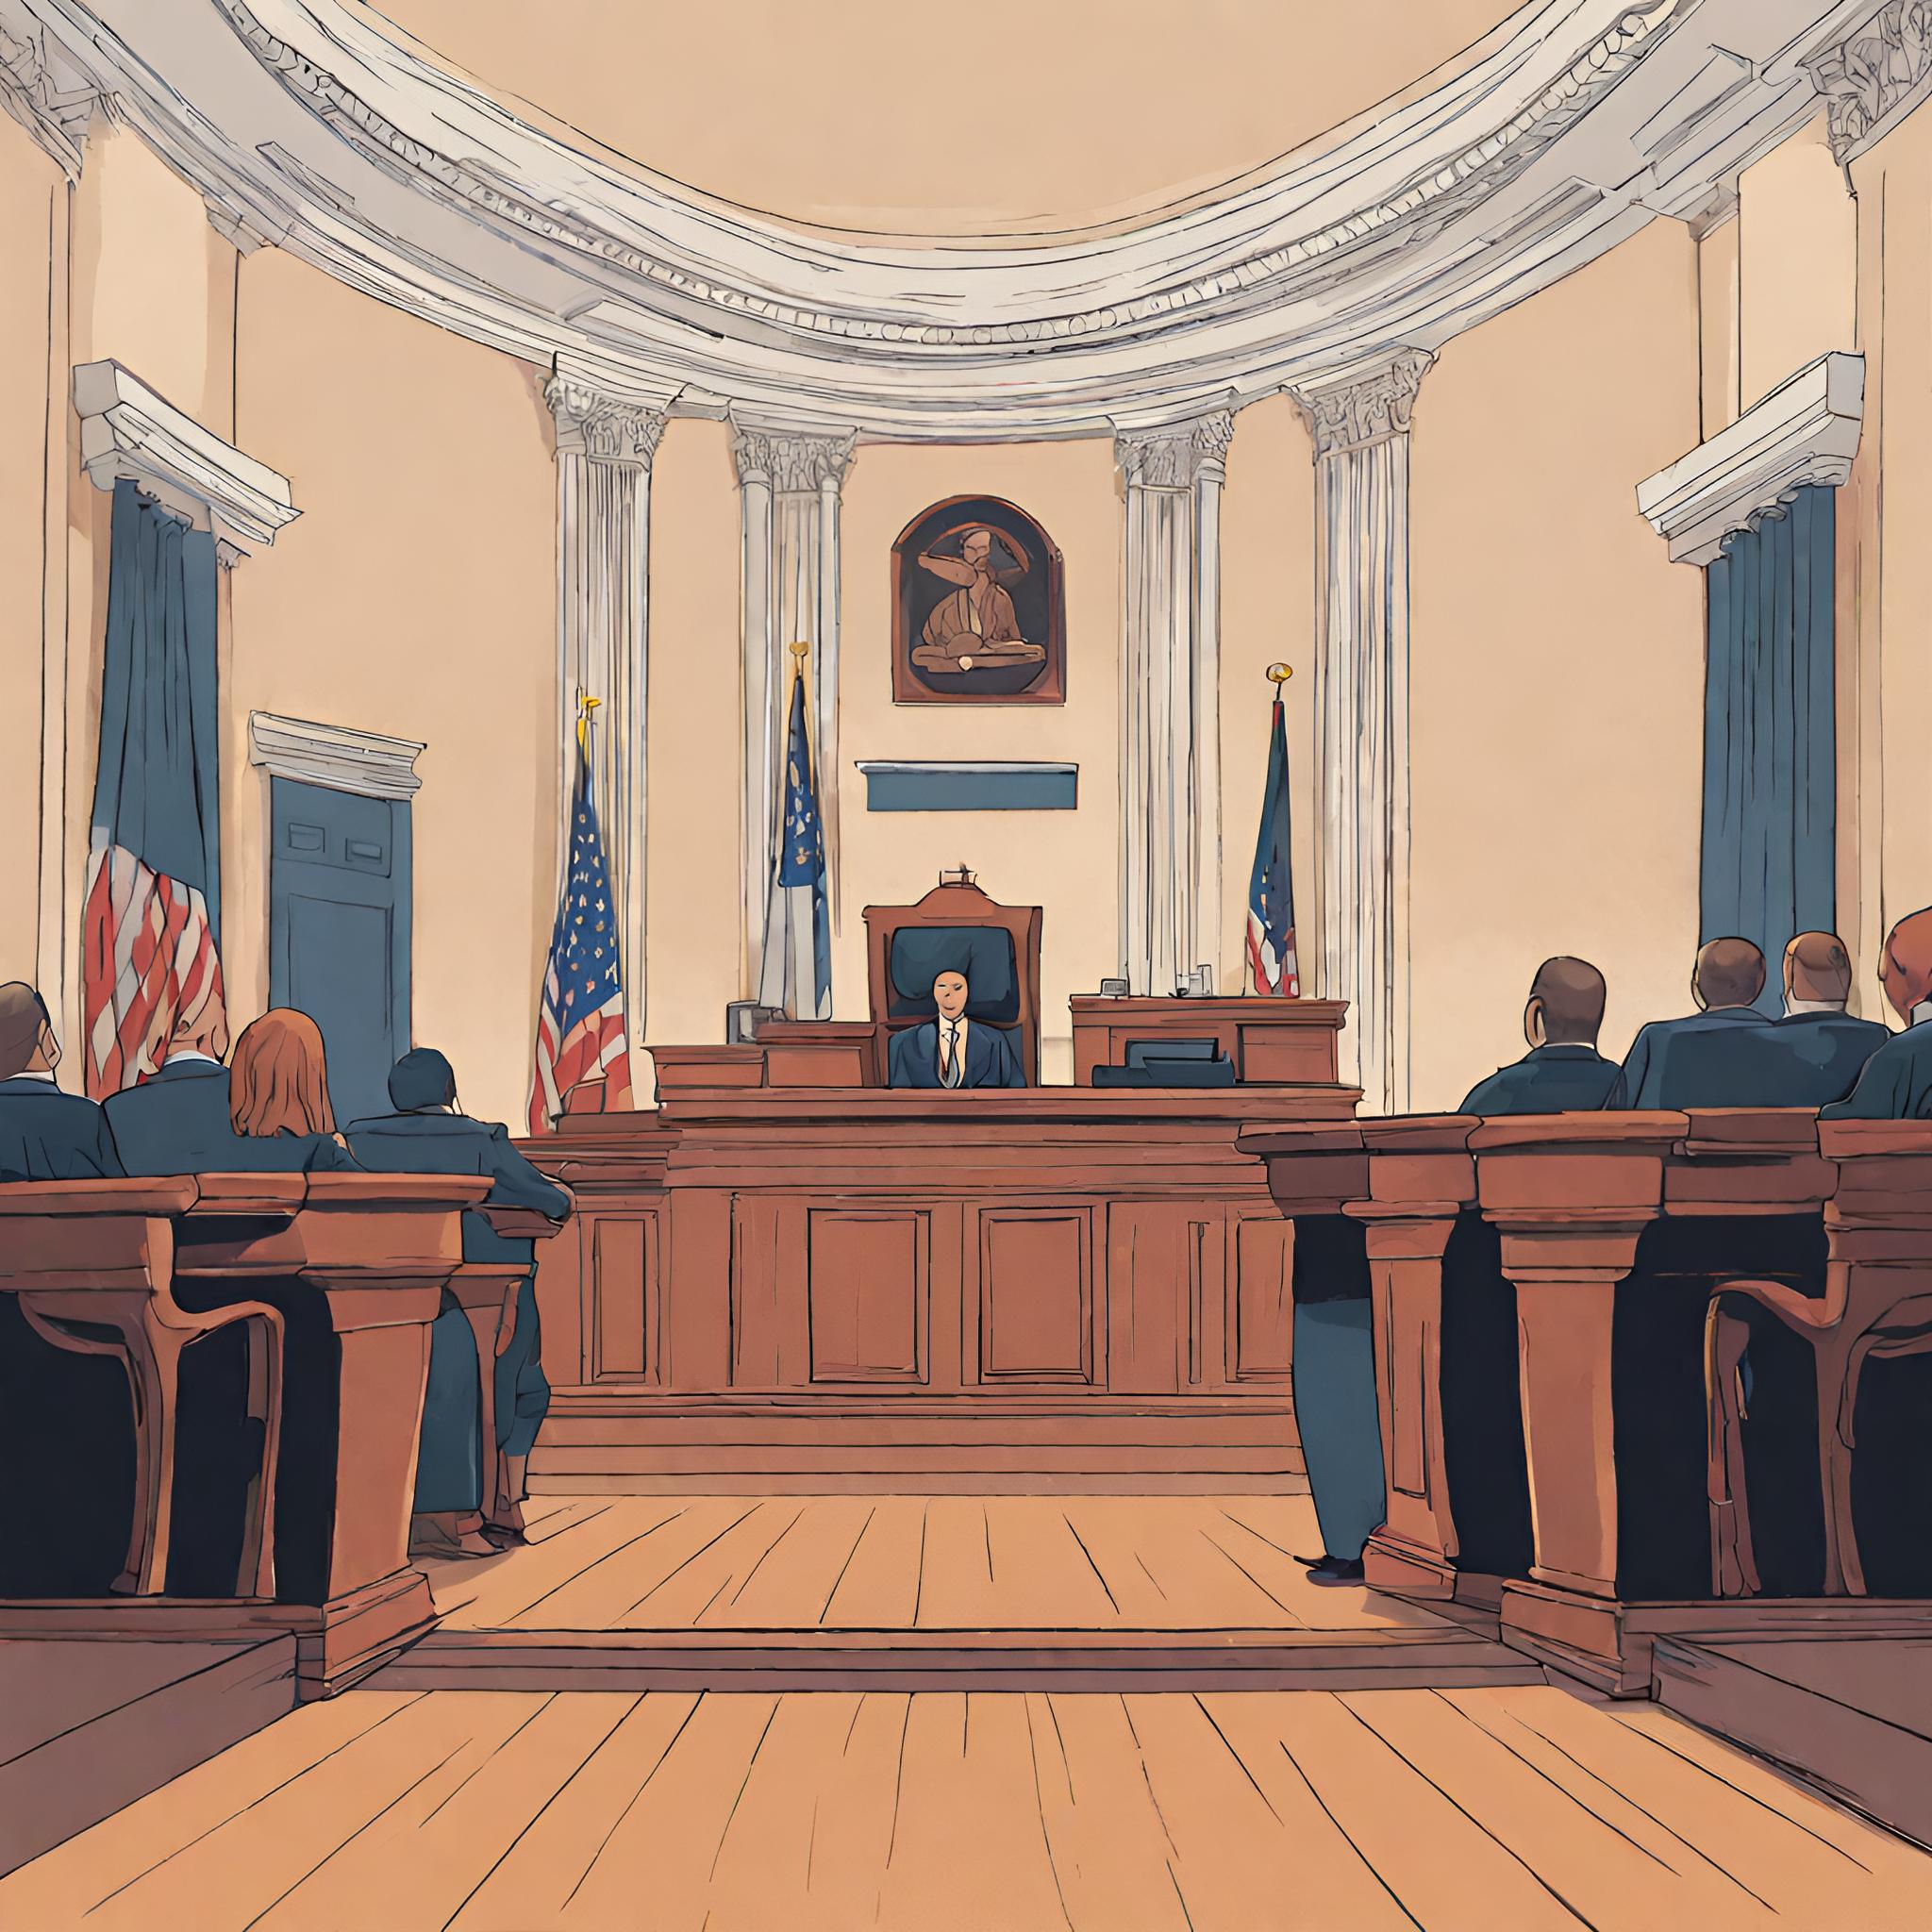 Illustration of a court room